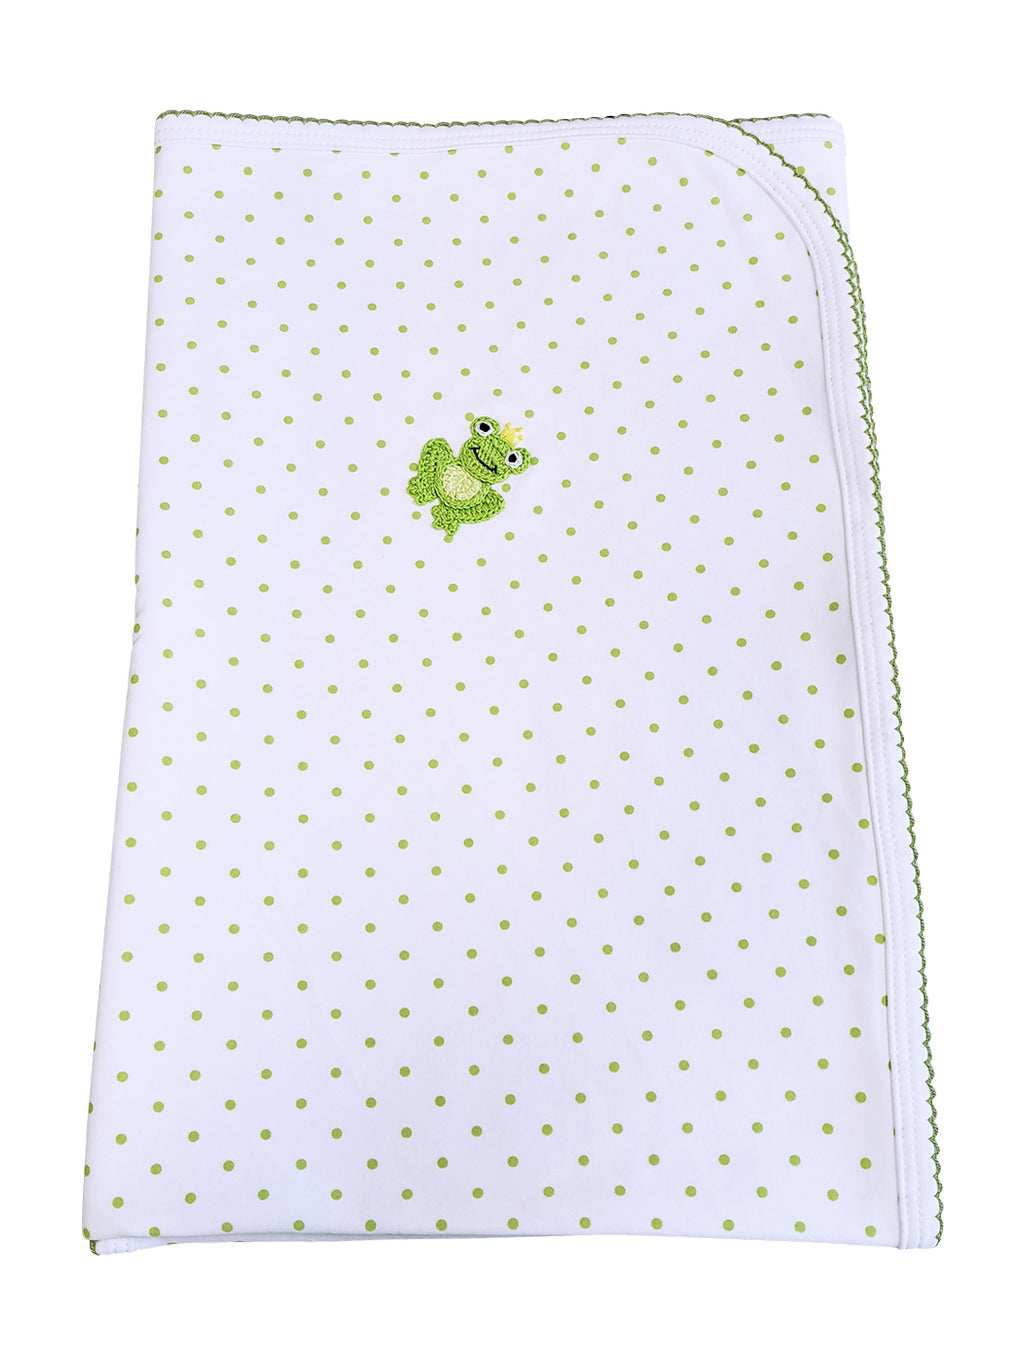 Frog Crochet - Unisex baby blanket Pima Cotton